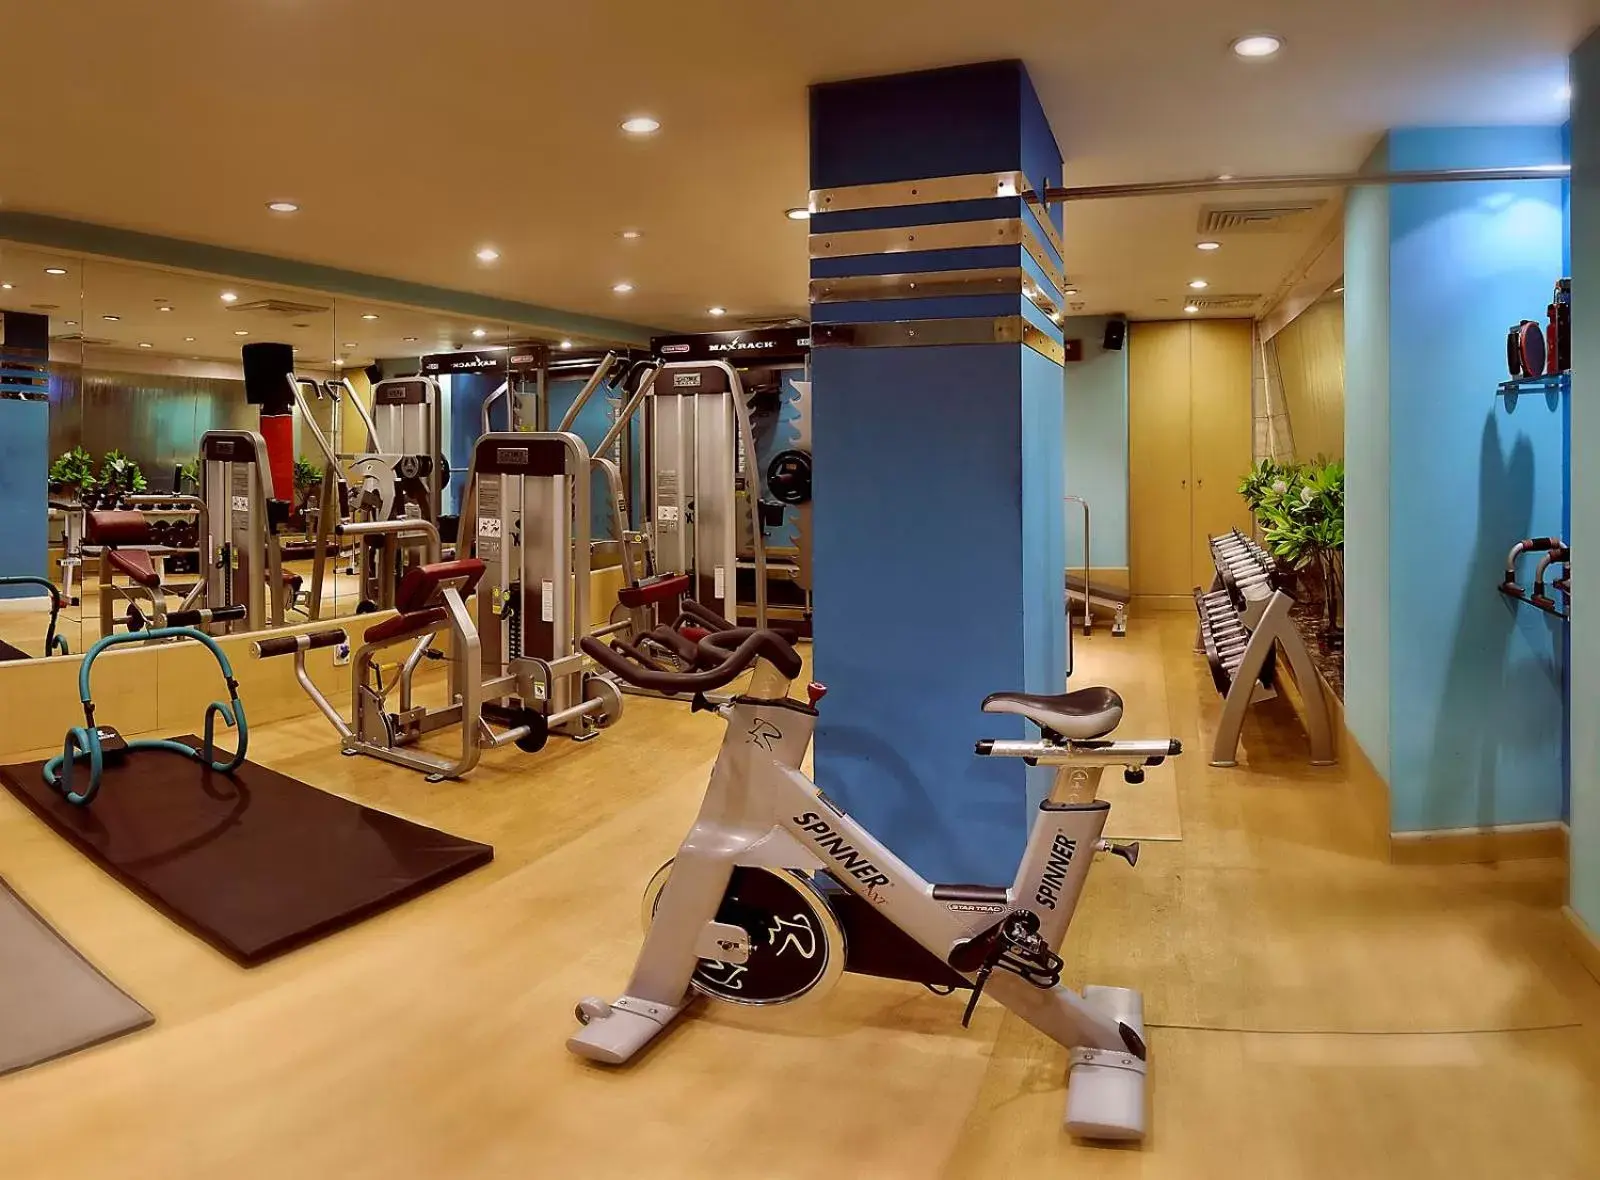 Fitness centre/facilities, Fitness Center/Facilities in The Suryaa Hotel New Delhi